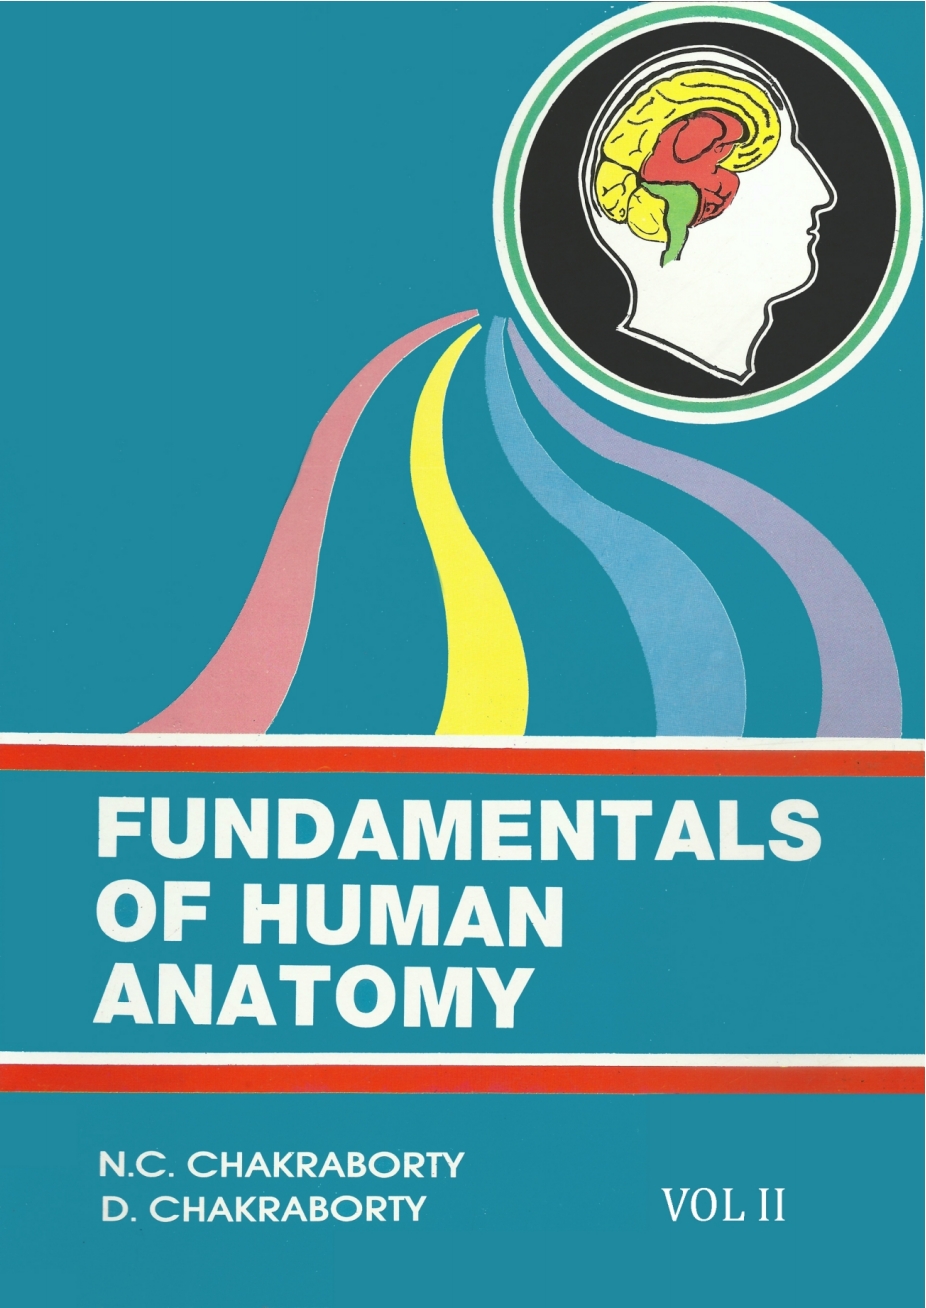 Fundamentals Of Human Anatomy Vol Ii N C Chakraborty D